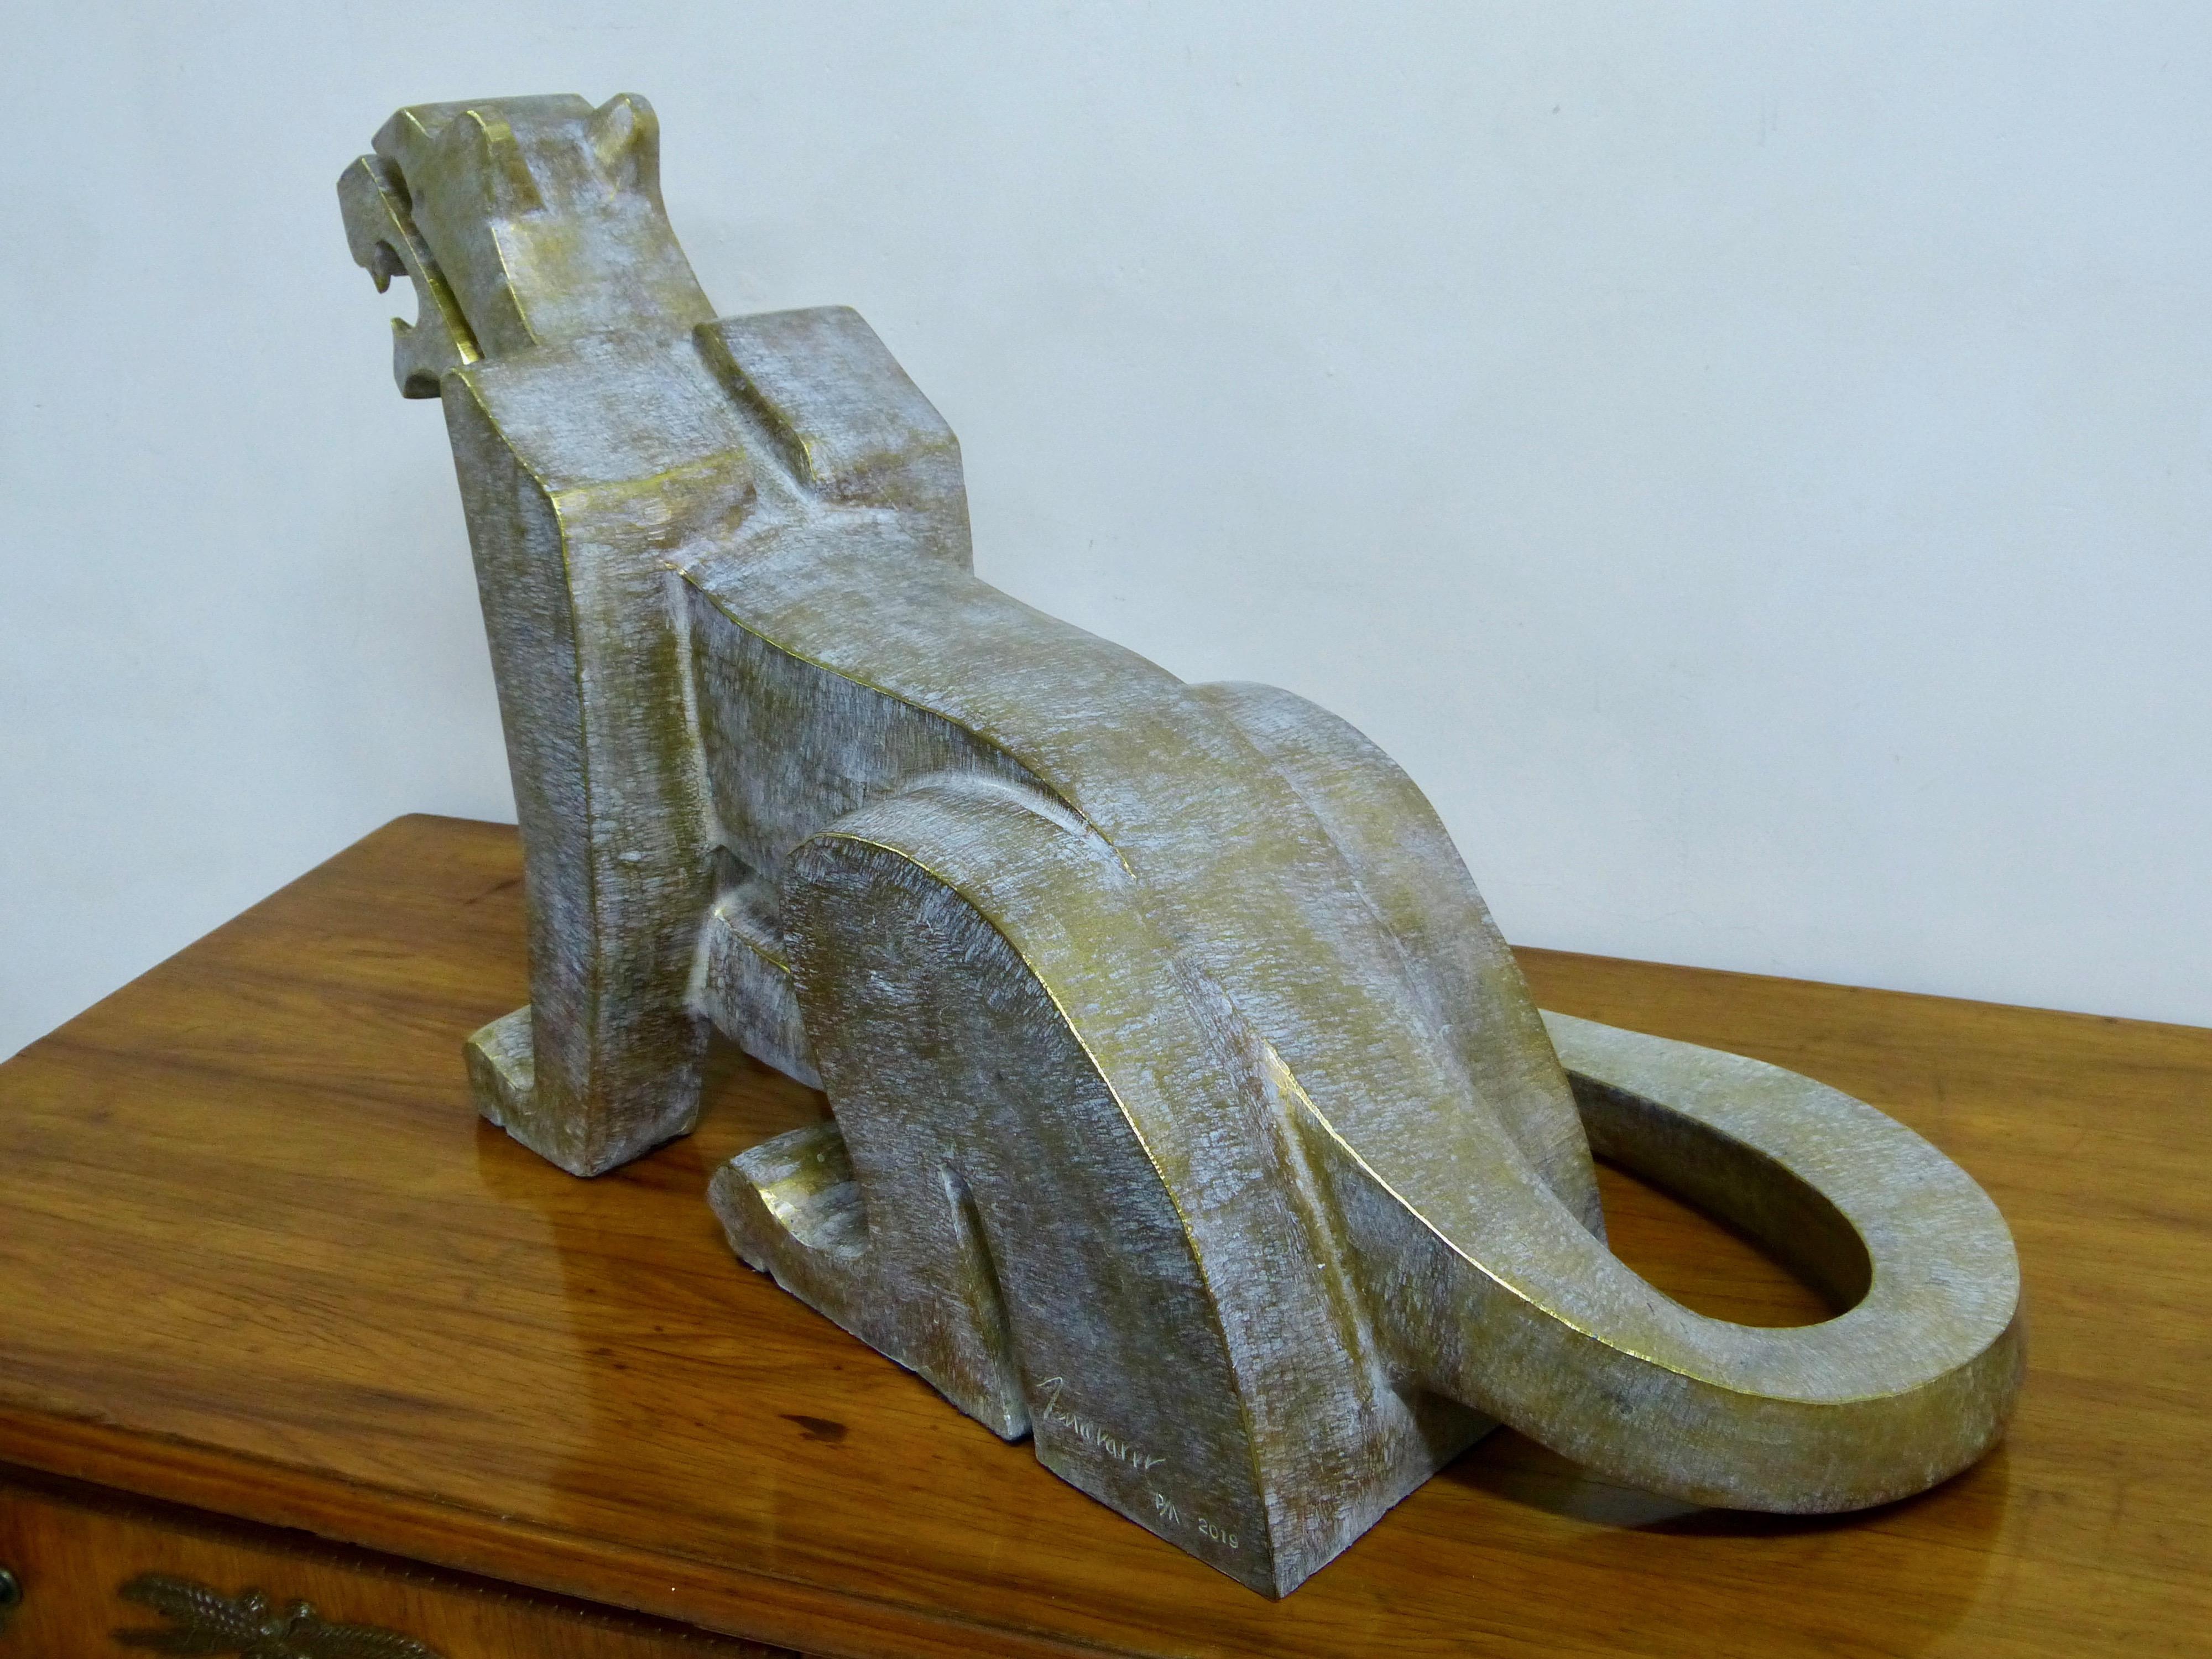 Patinated Jaguar Bronze Sculpture by Raul Navarro 2019 For Sale